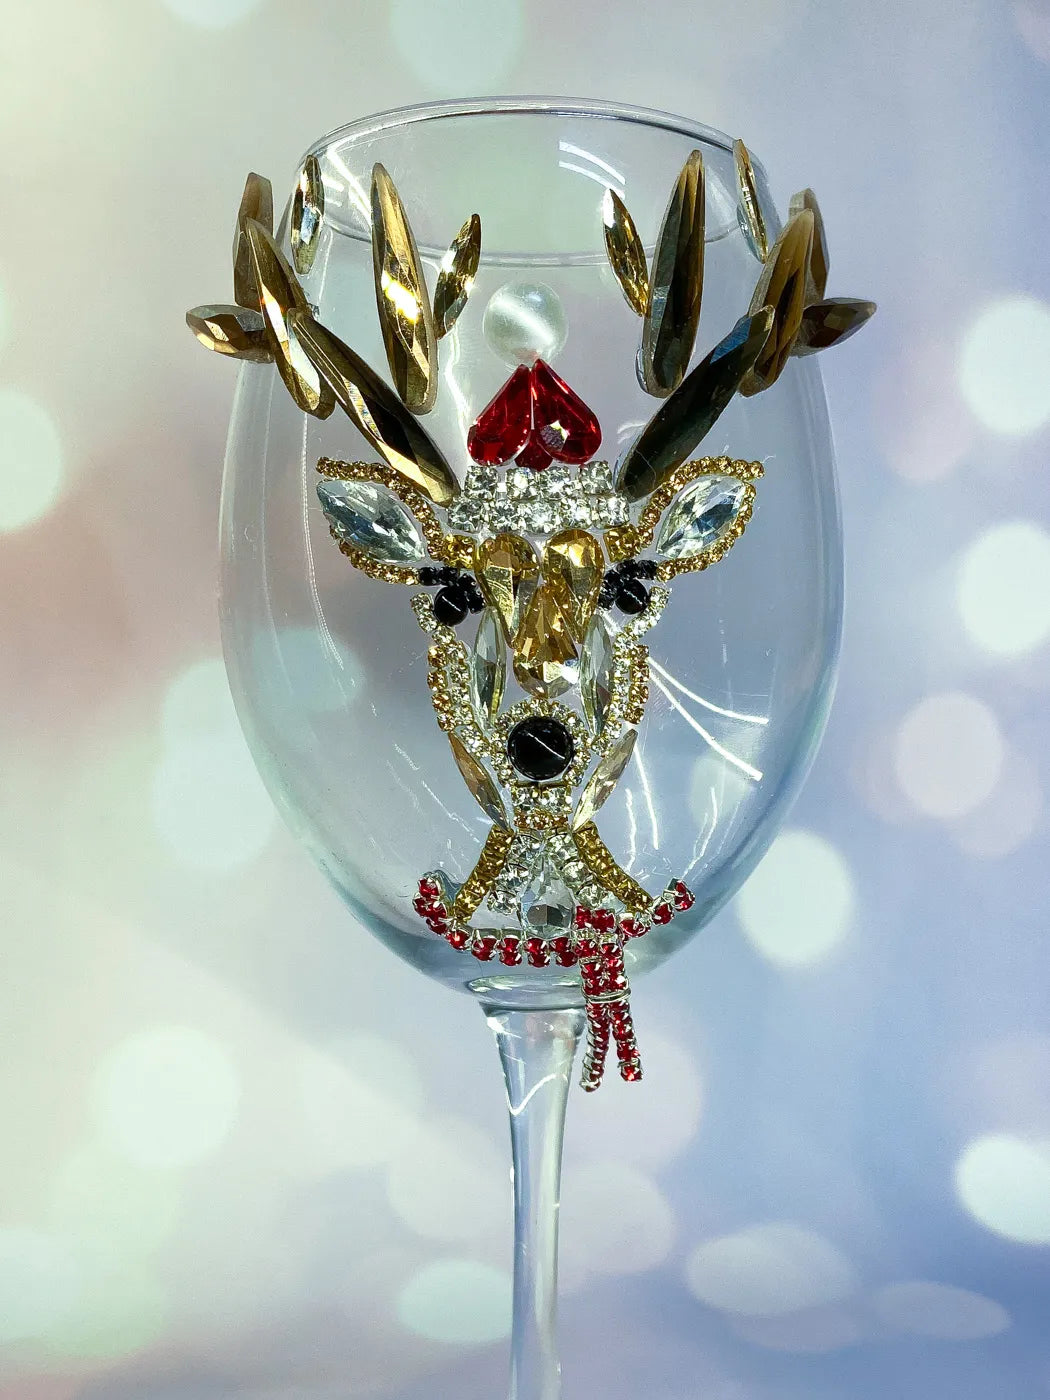 Gold & Silver Deer Wine Glasses